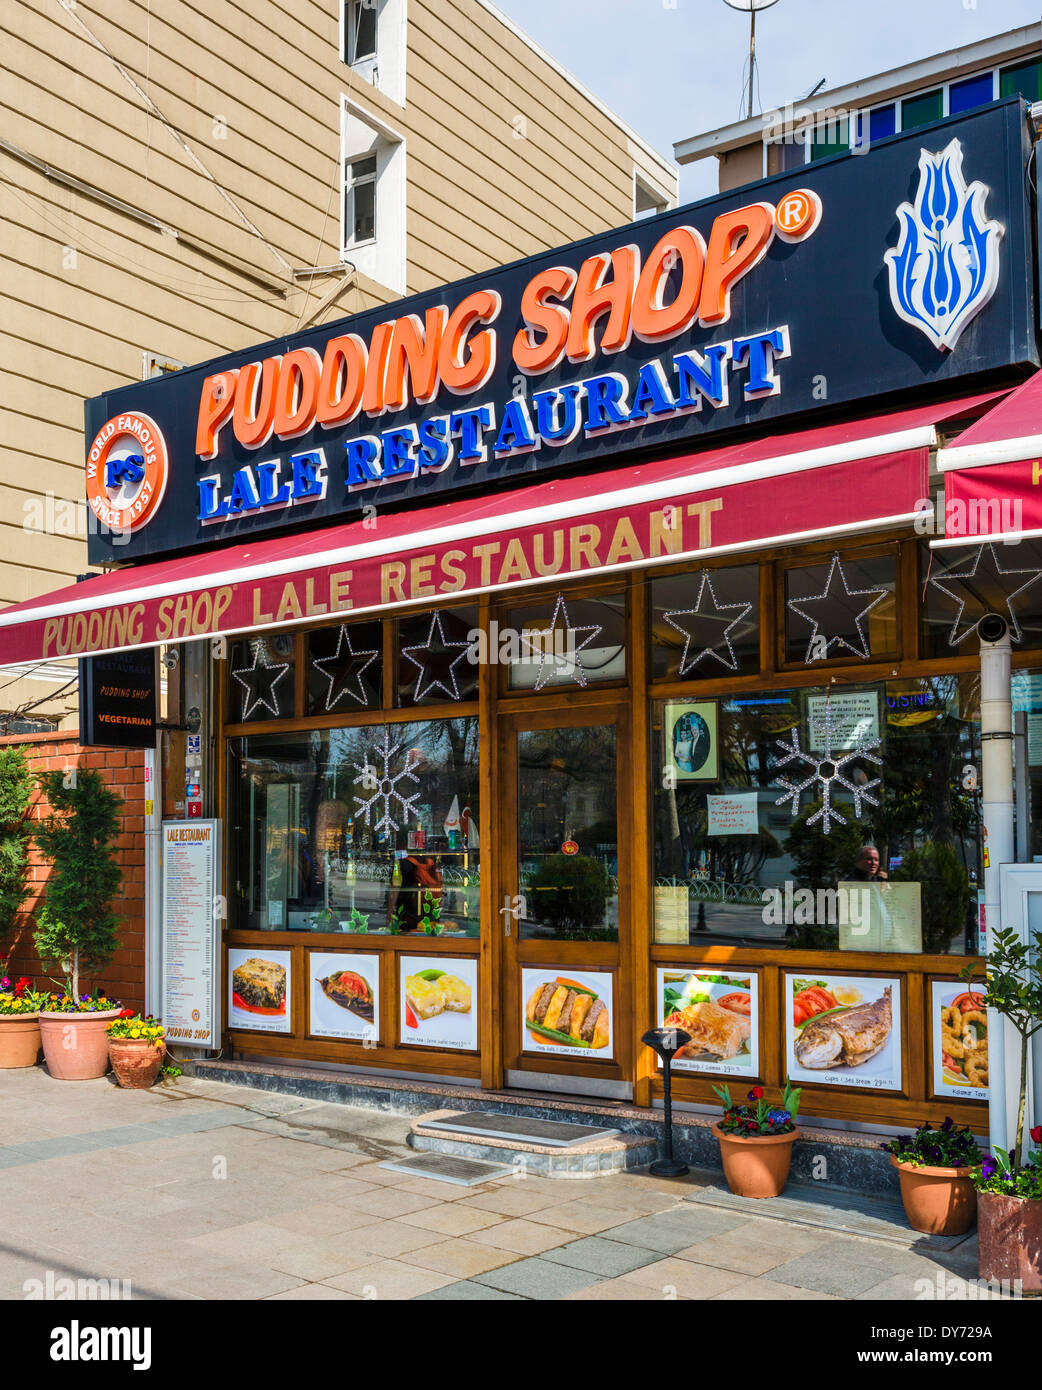 The Pudding Shop (Lale Restaurant) Divan Yolu Caddesi in the Sultanahmet district, Photo - Alamy